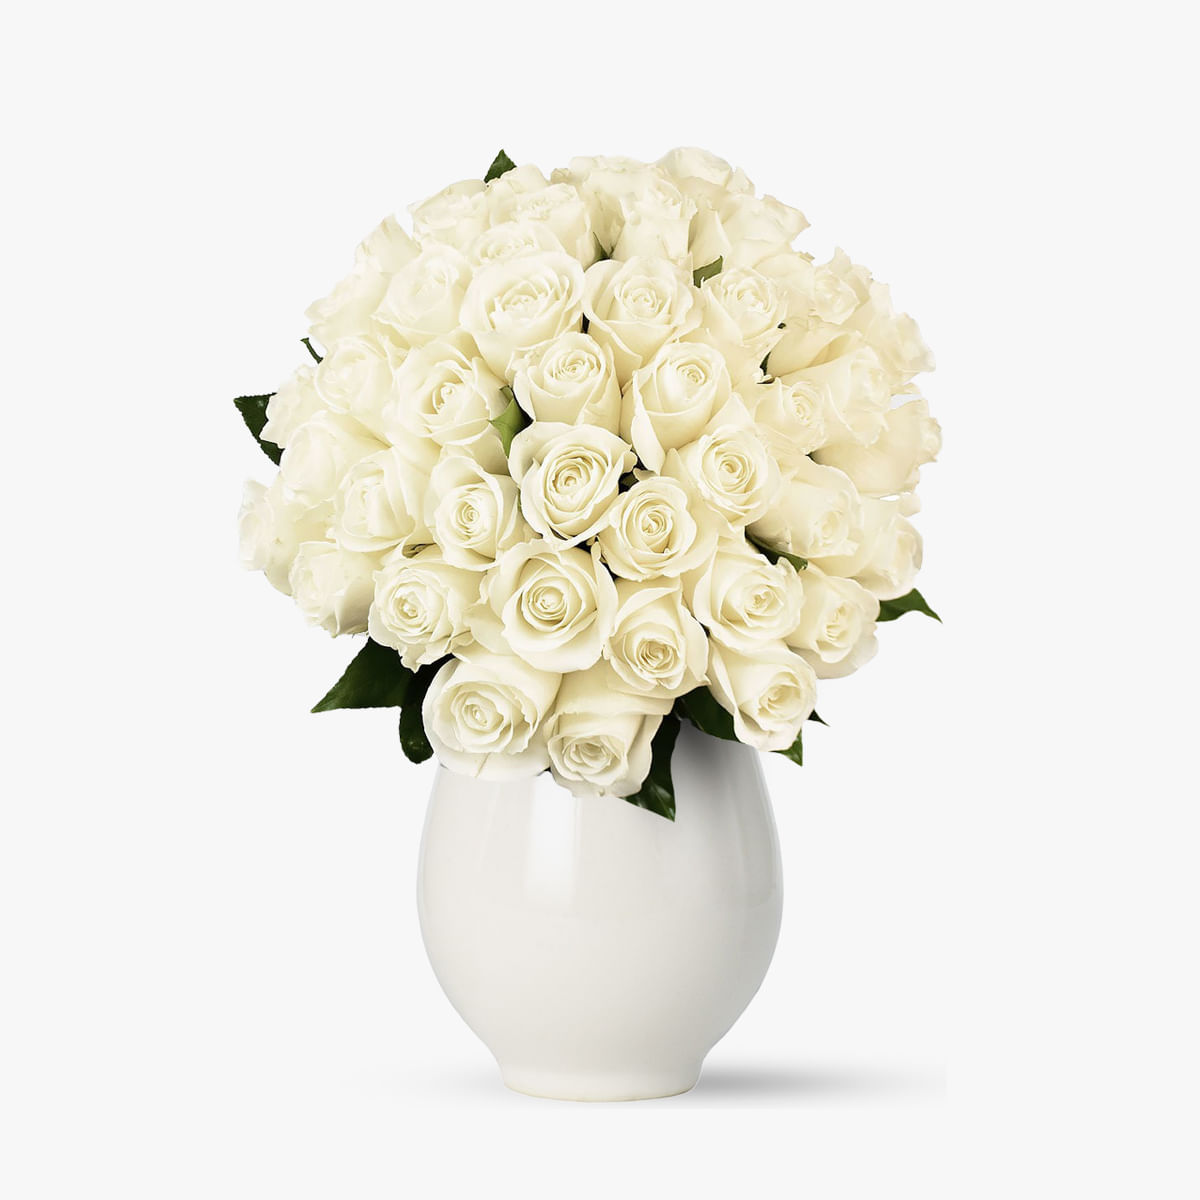 Buchet de 43 trandafiri albi – Standard albi